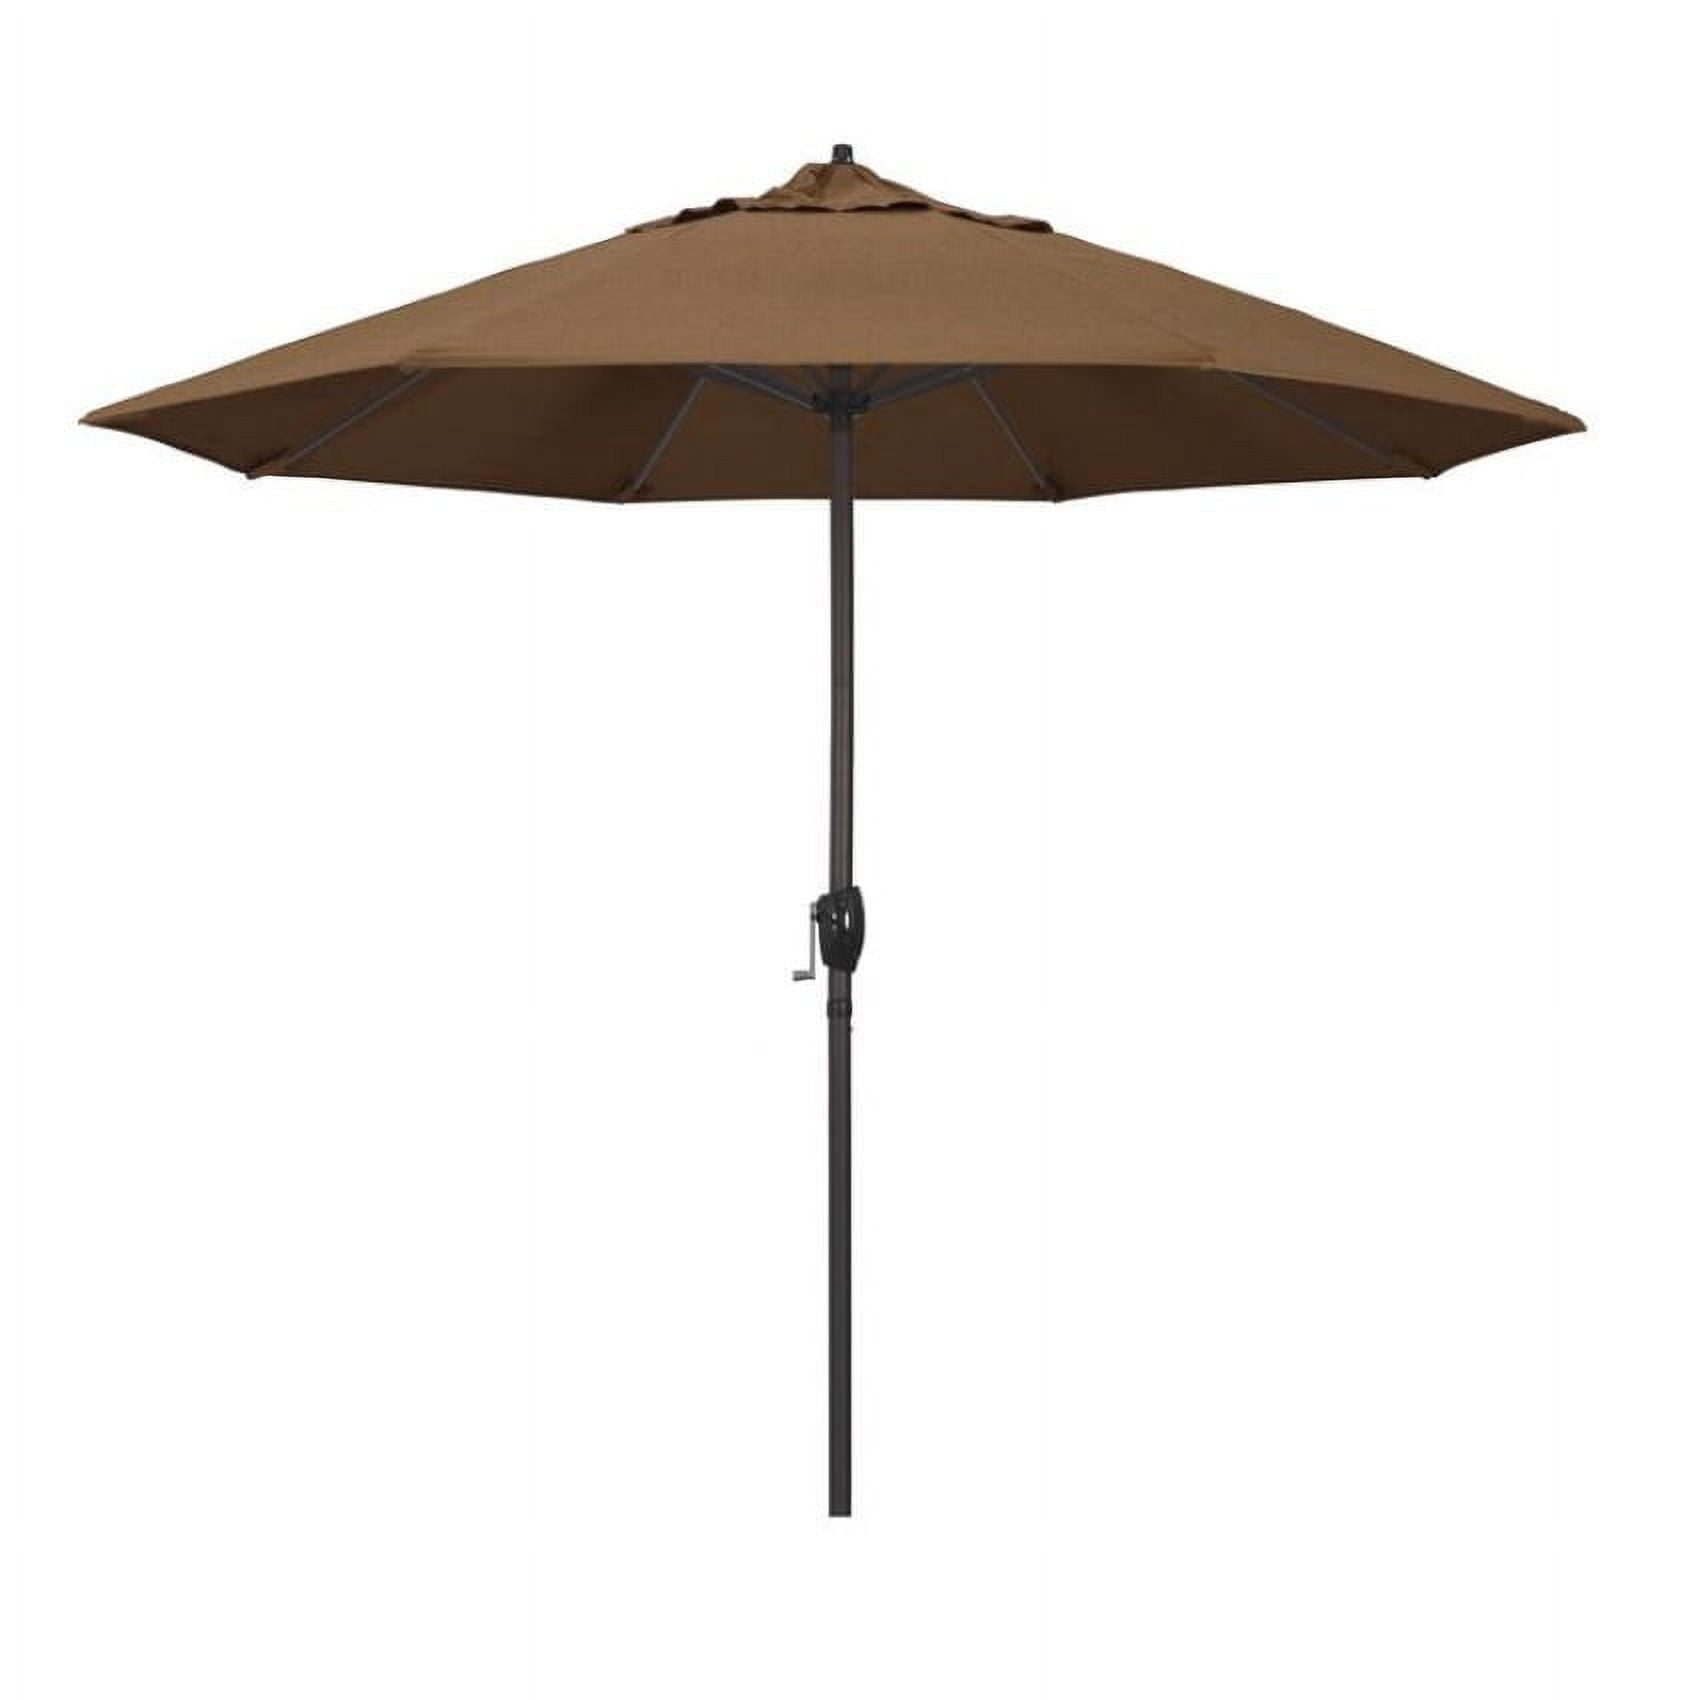 Ata908117-5488 9 Ft. Casa Series Patio Bronze Auto Tilt Crank Lift - Sunbrella 1a Teak Fabric